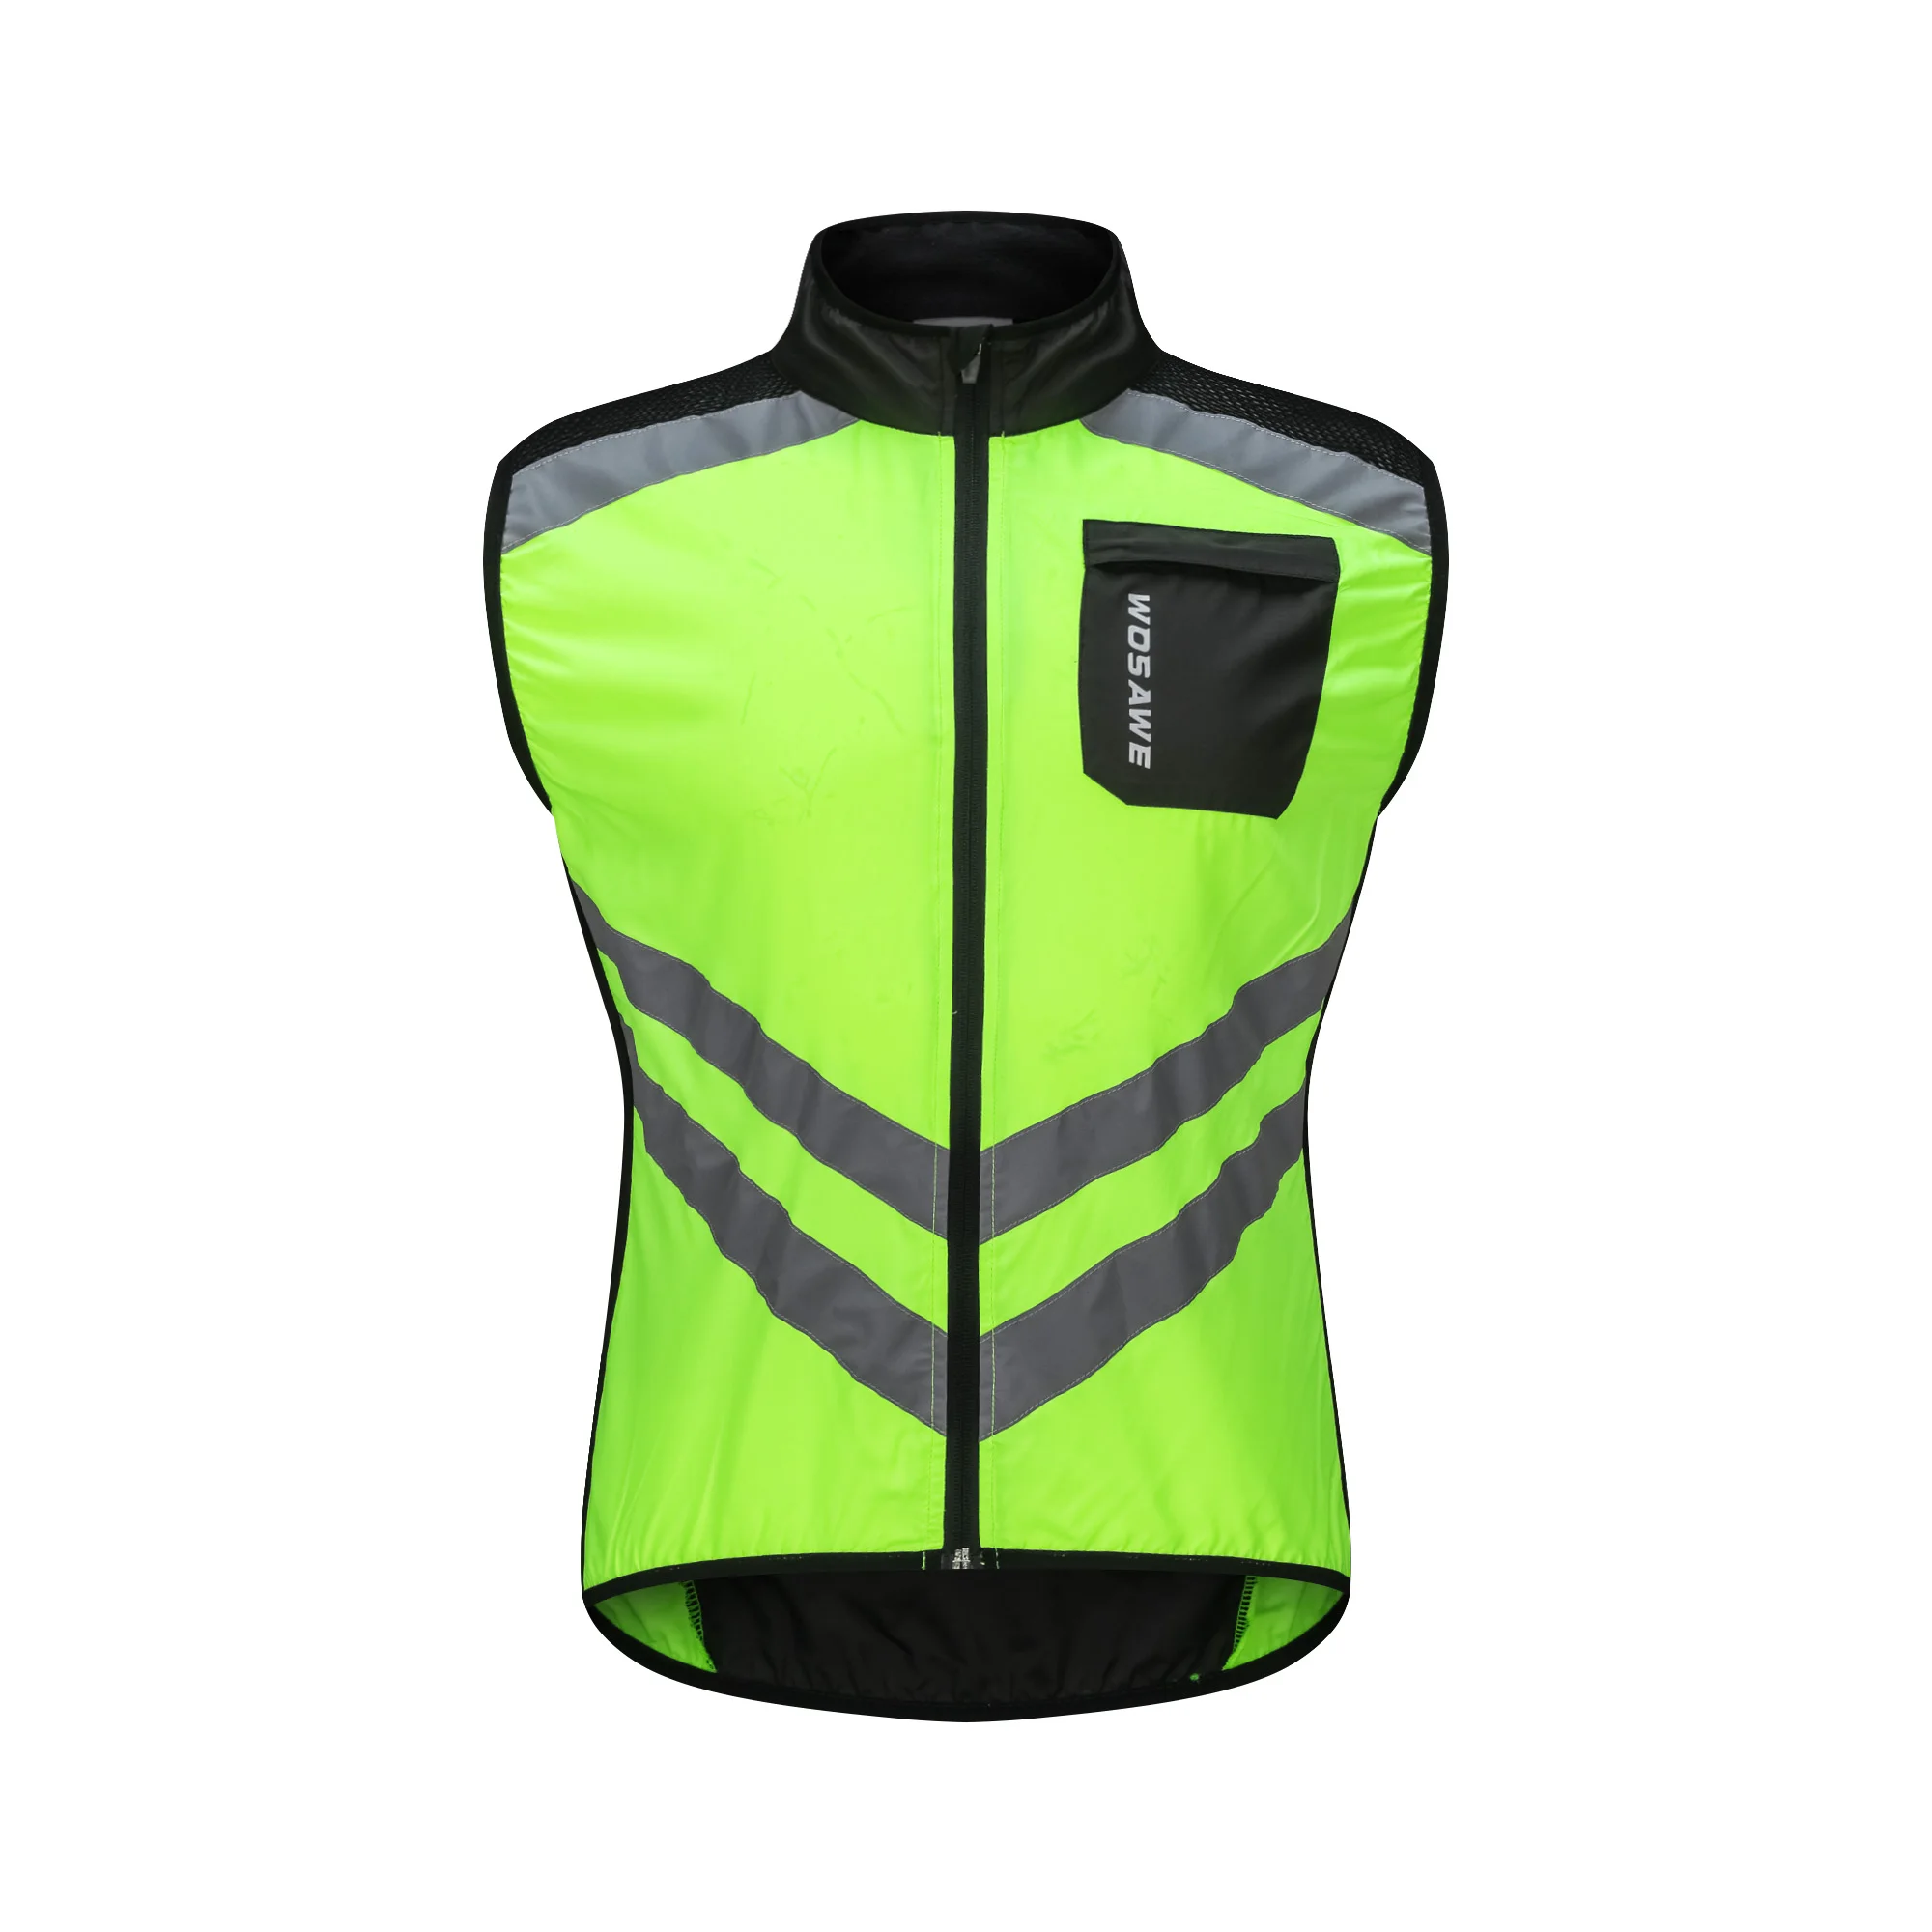 WOSAWE High visibility Jacket Road Cycling Night Riding Reflective Vests Motorcycle Running Safety Clothing